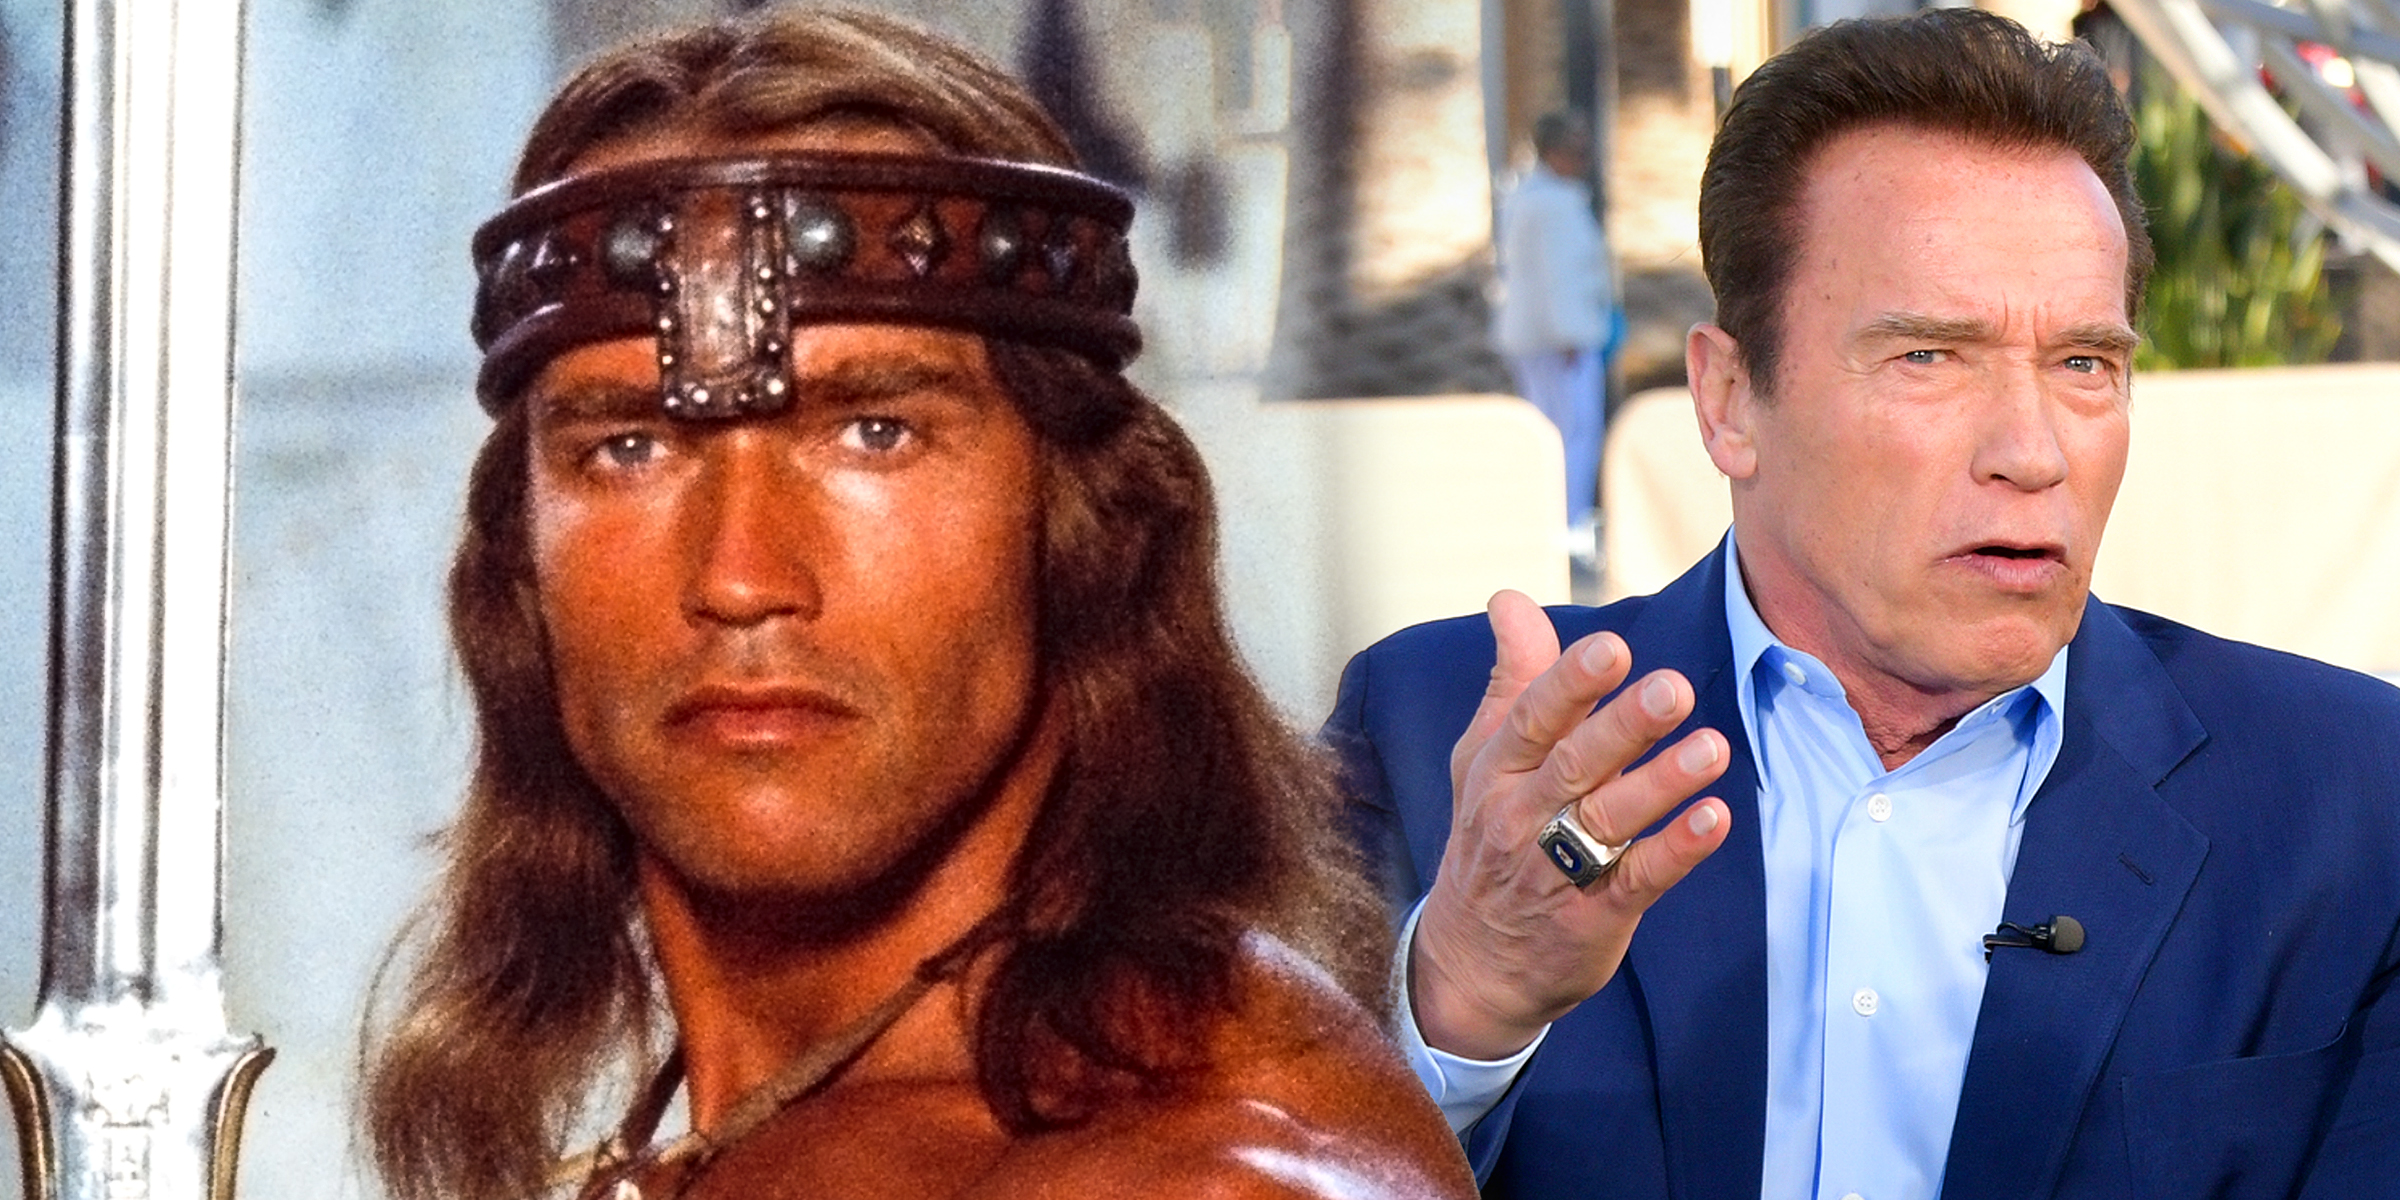 Arnold Schwarzenegger | Source: Getty Images